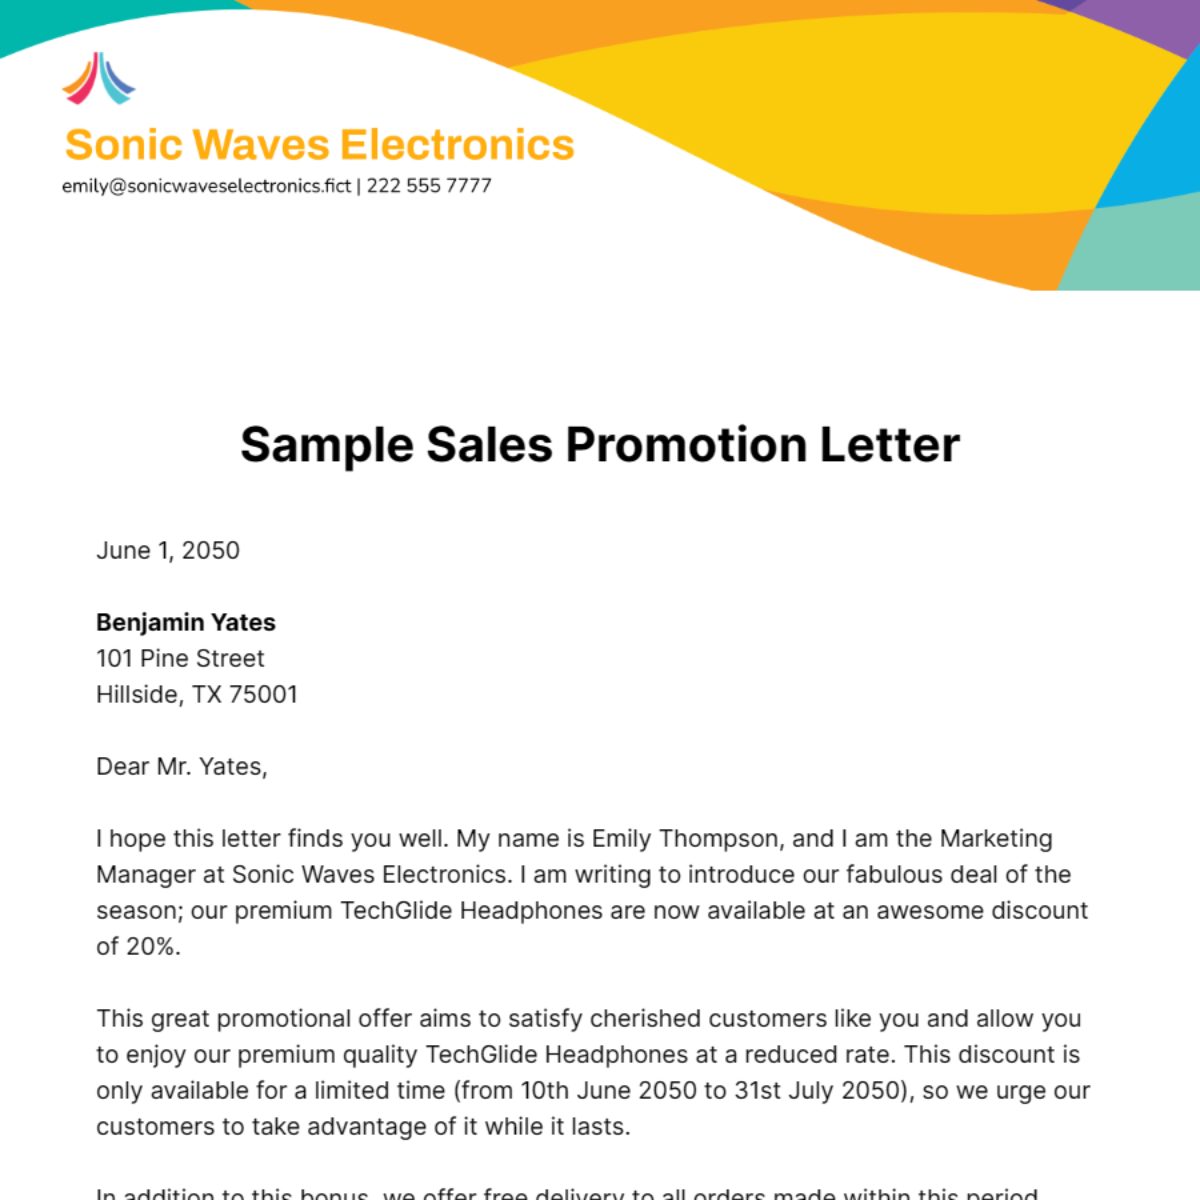 Sample Sales Promotion Letter Template